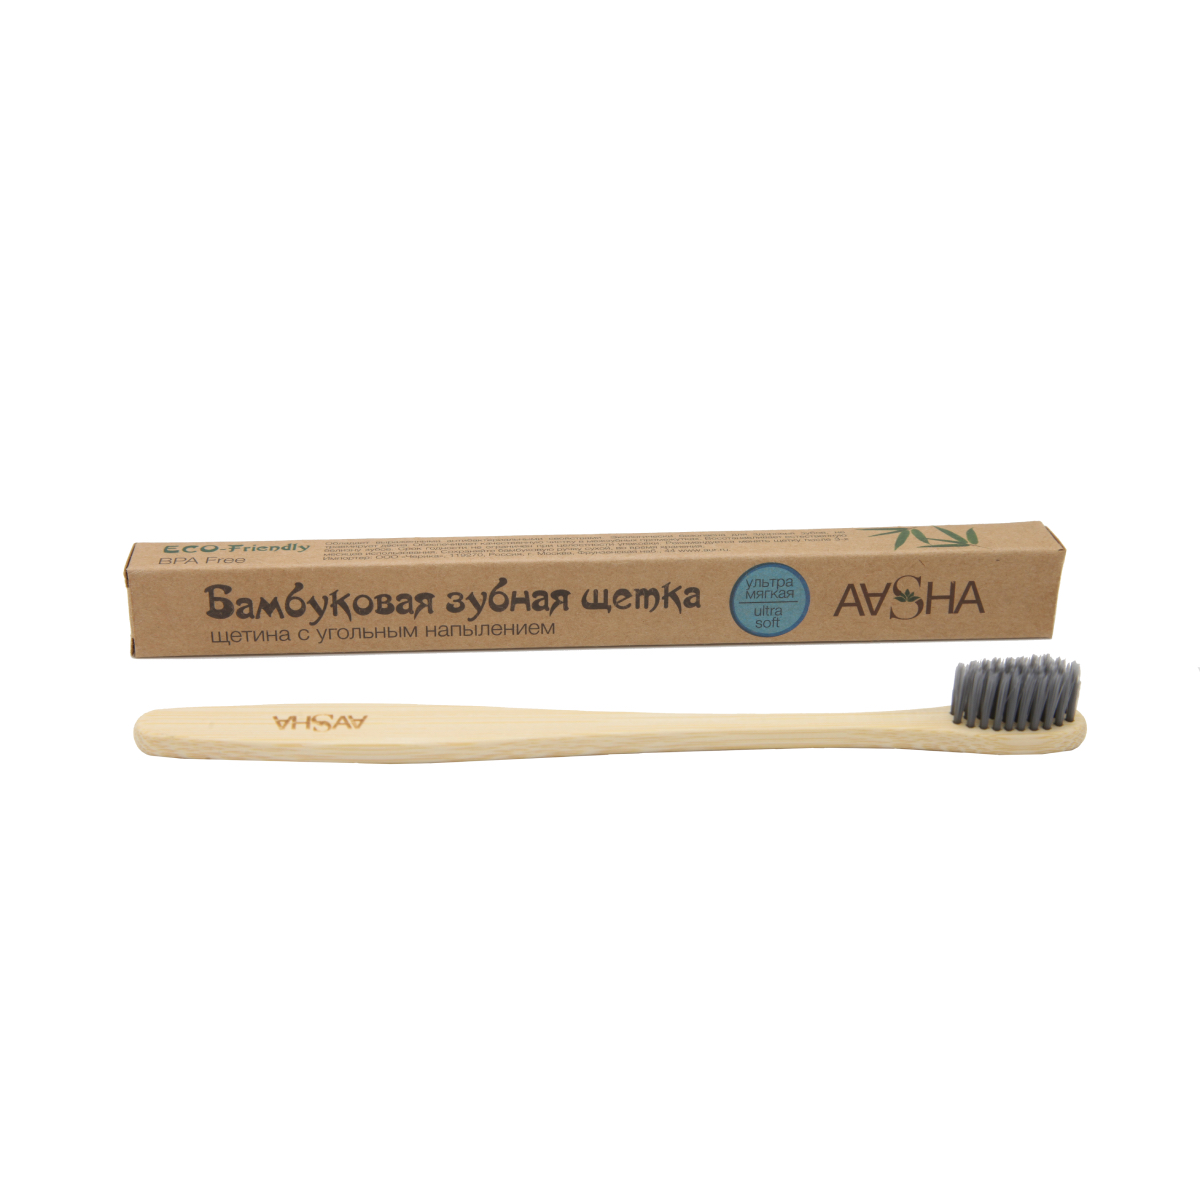 Бамбуковая зубная щетка Aasha с угольным напылением ULTRA SOFT (Ультра мягкая), 1 шт. бамбуковая зубная щетка aasha с угольным напылением medium 1 шт